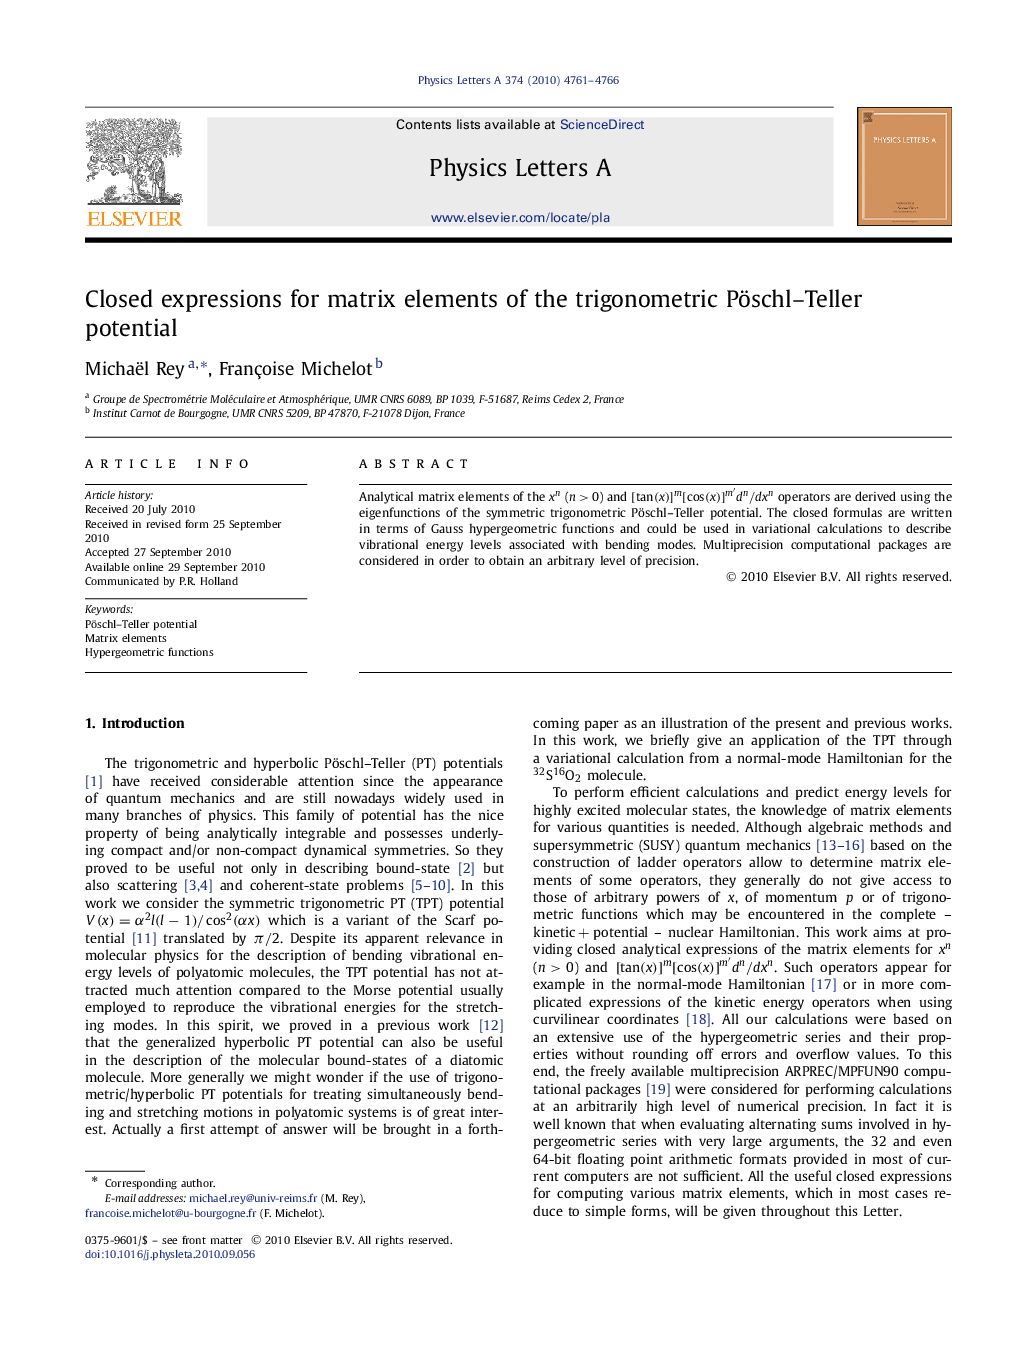 Closed expressions for matrix elements of the trigonometric Pöschl-Teller potential